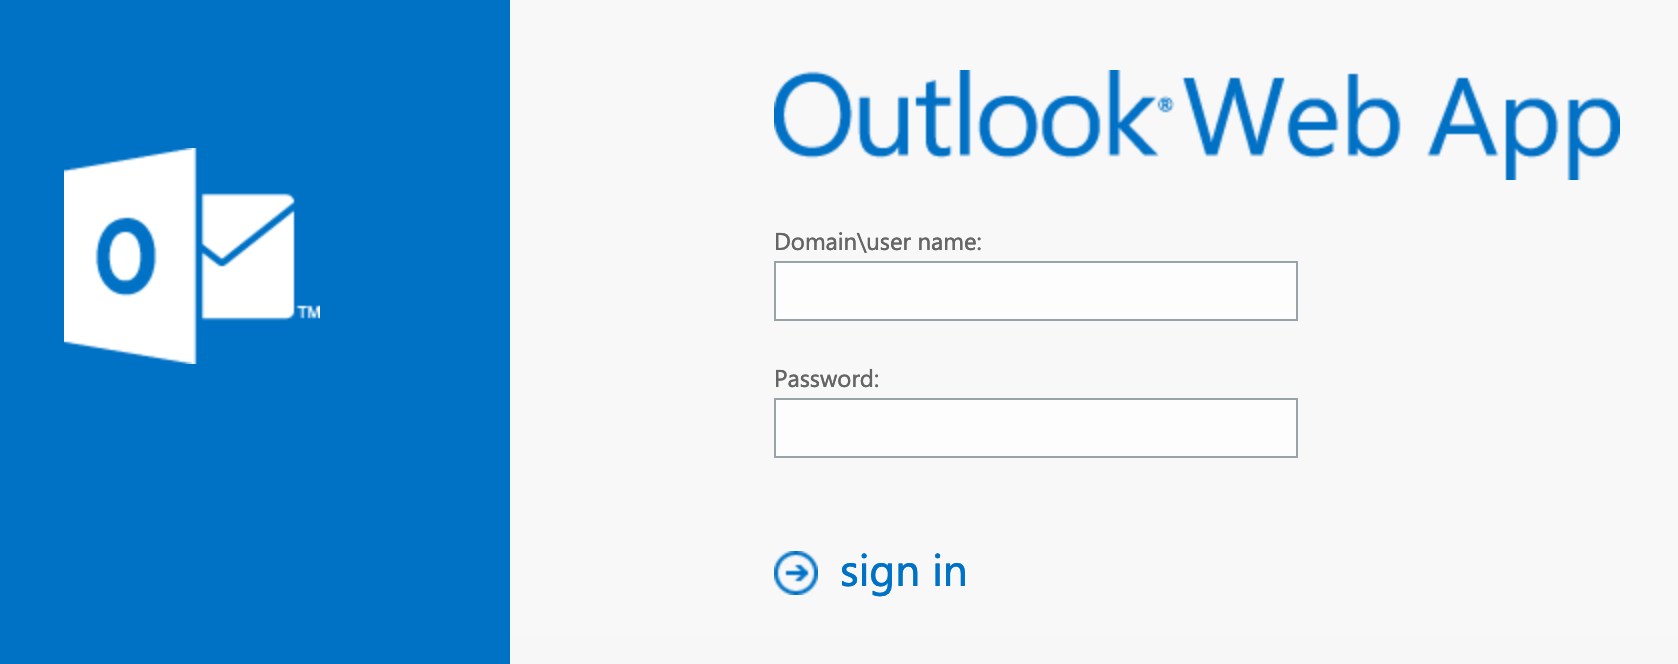 Owa rencredit почта. Outlook почта. Почта Outlook web app. Outlook и сотрудники. Электронная почта аутлук.